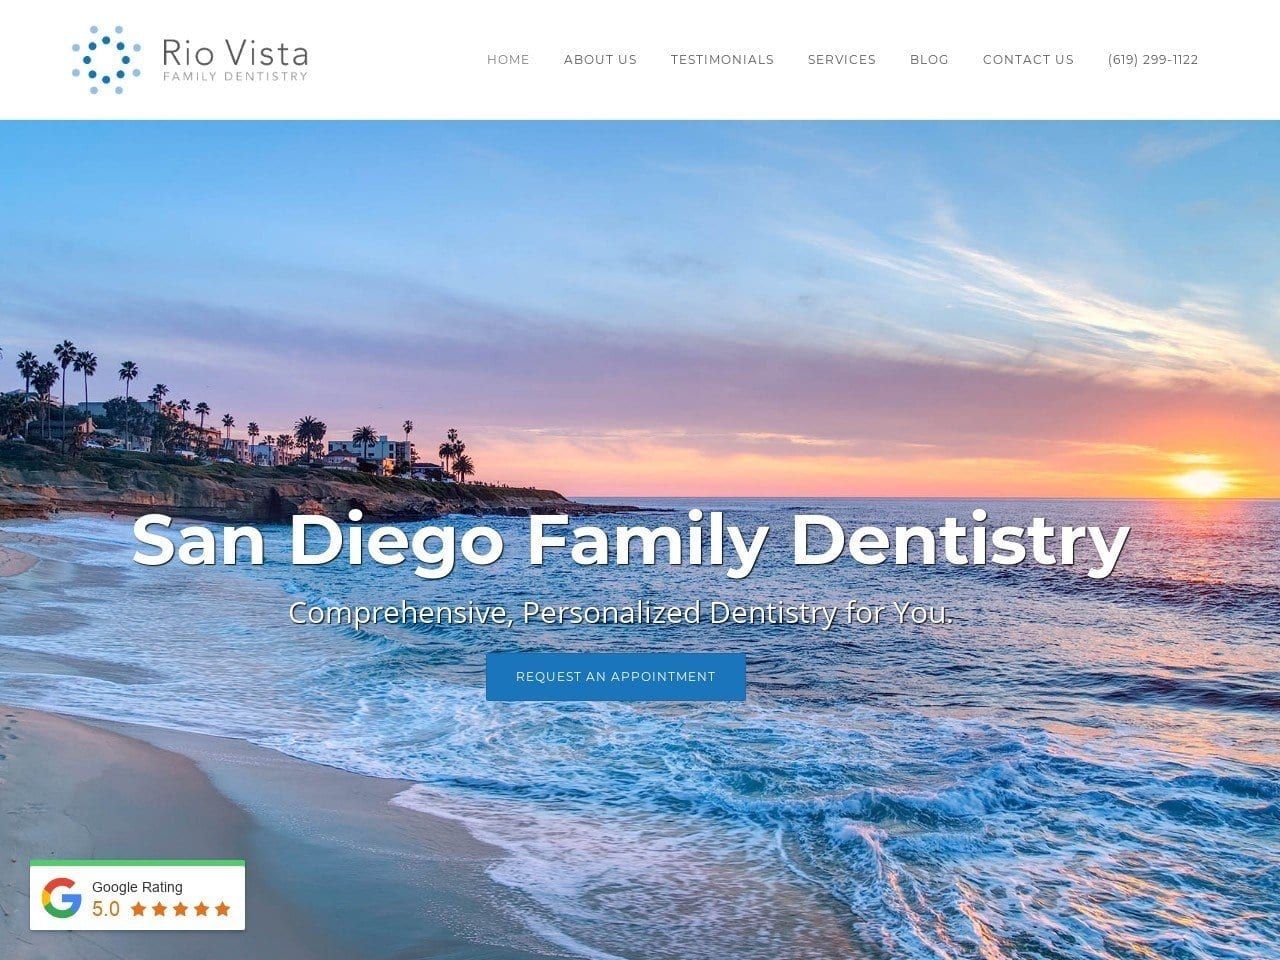 Rio Vista Family Dentistry Website Screenshot from riovistafamilydentistry.com